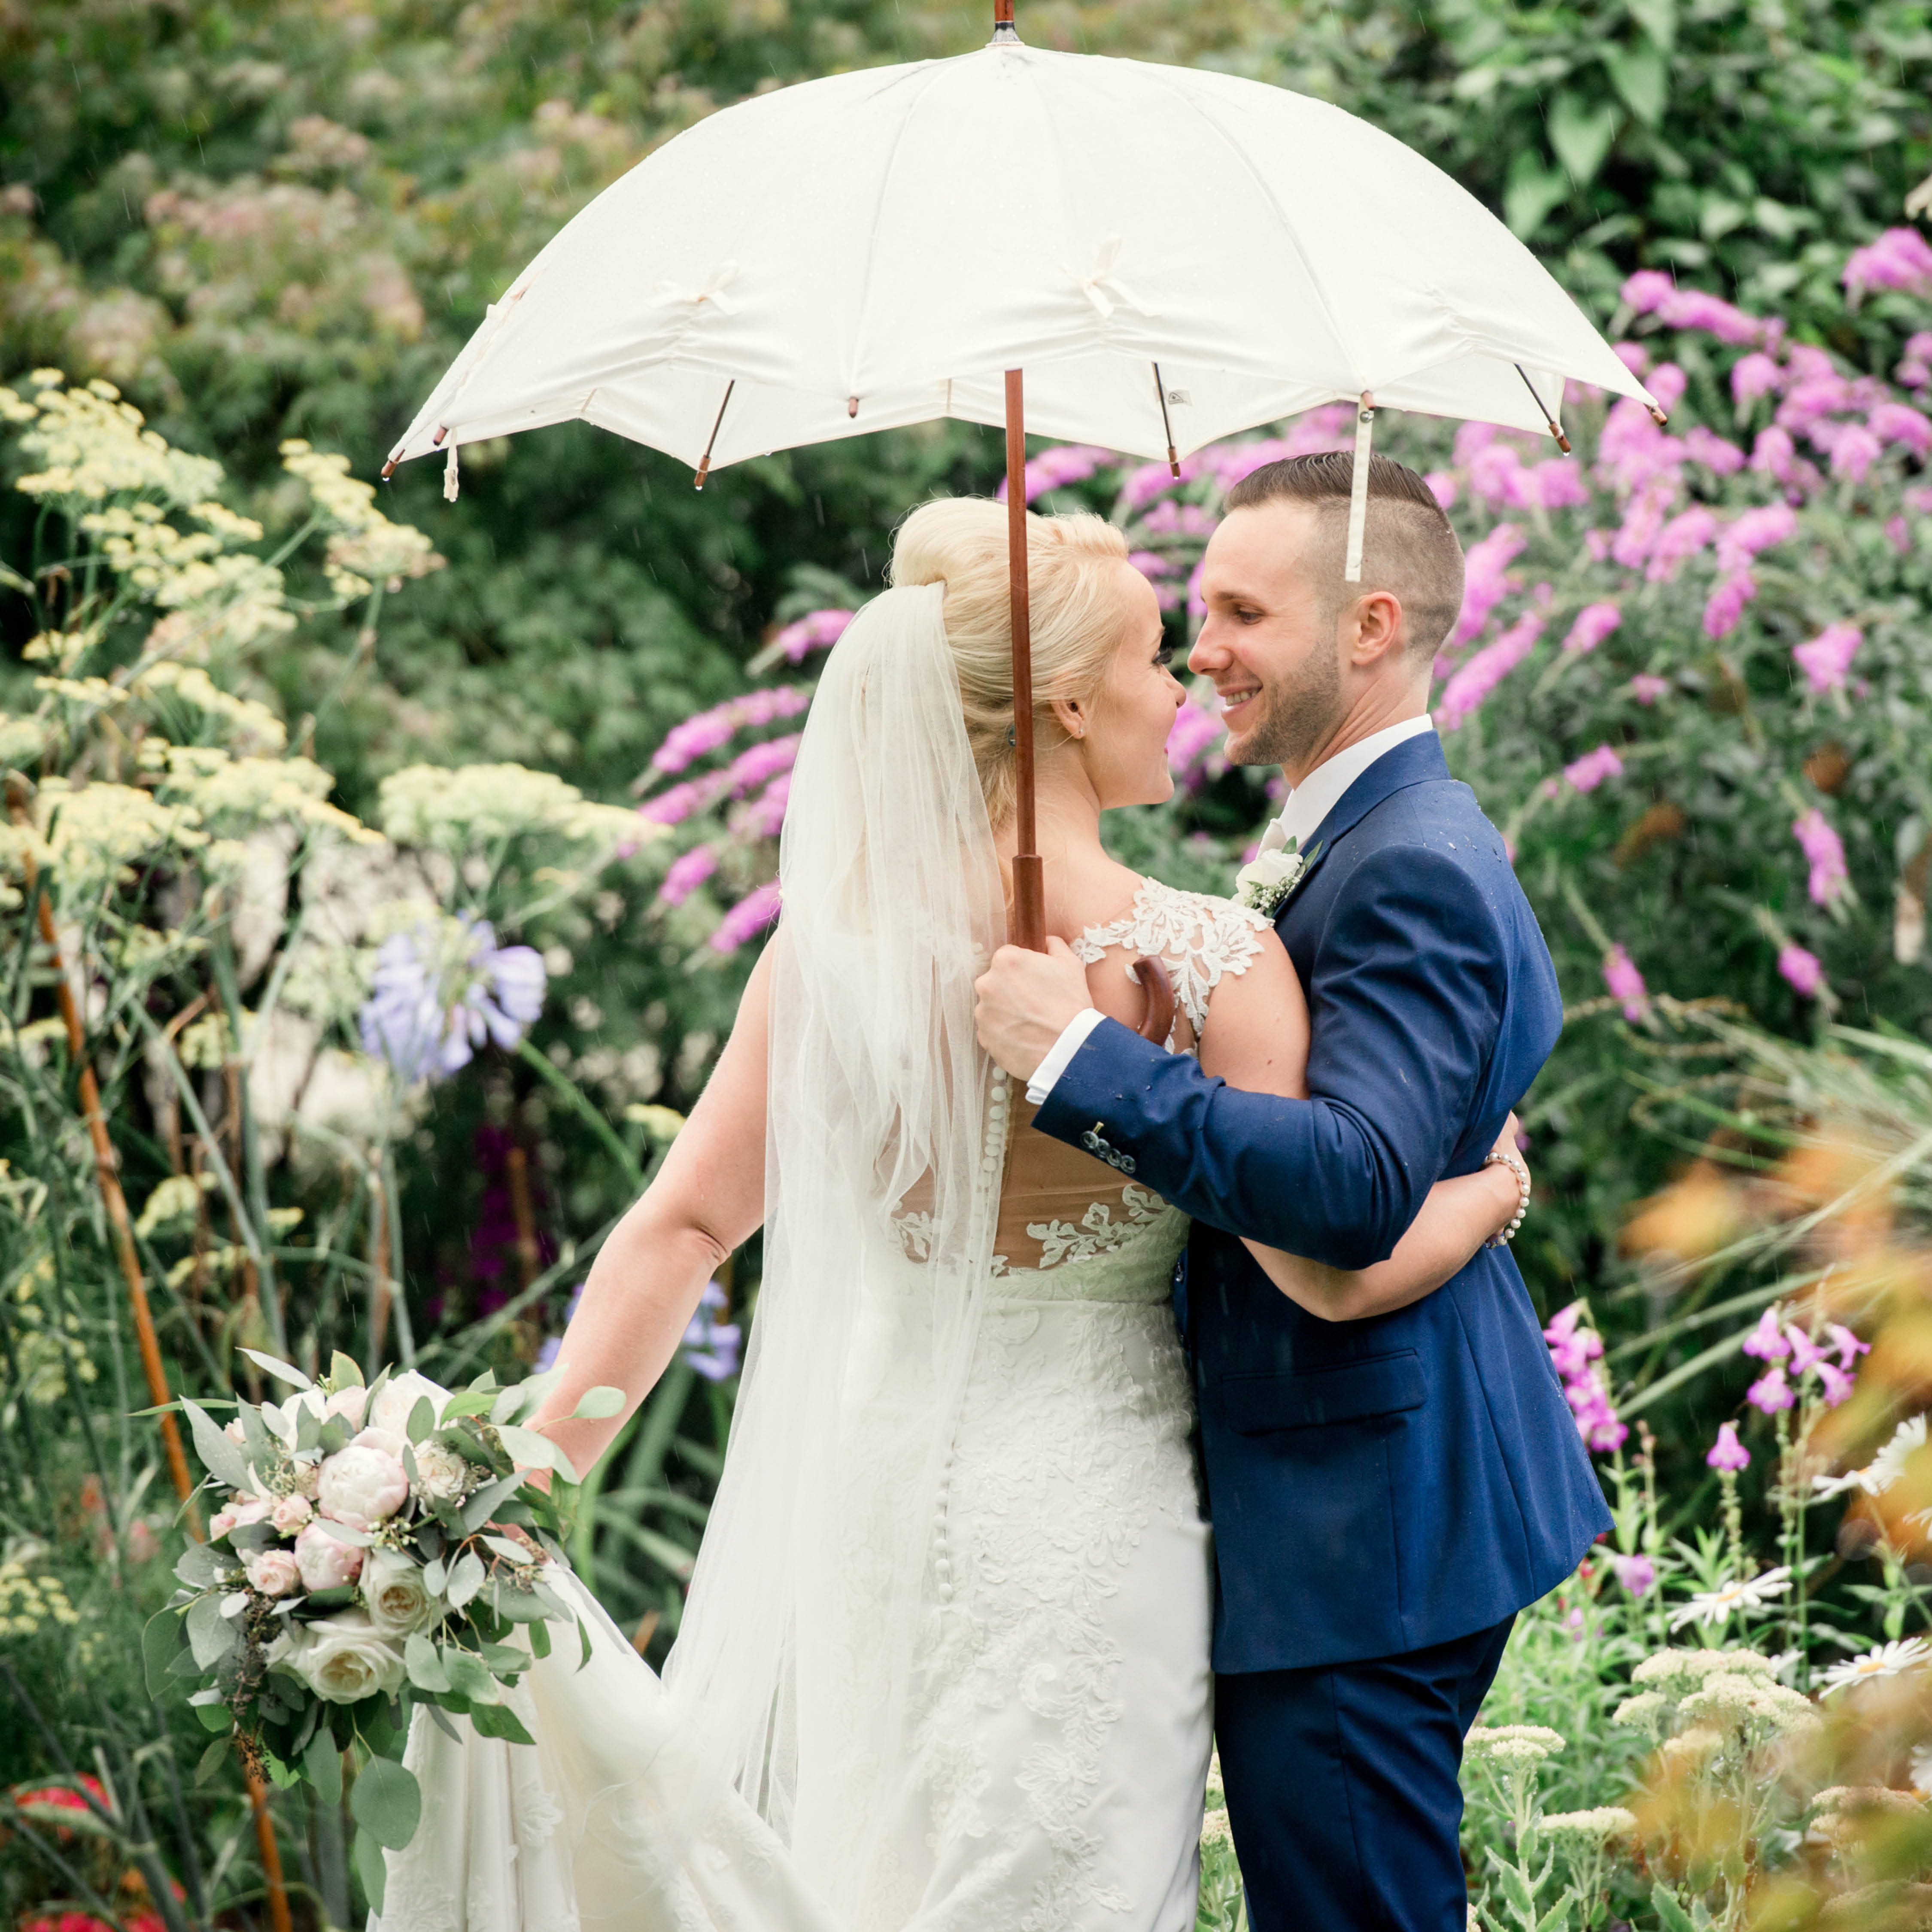 Little Details Shouldn't Overlook Wedding Day, wedding weather, wedding umbrella